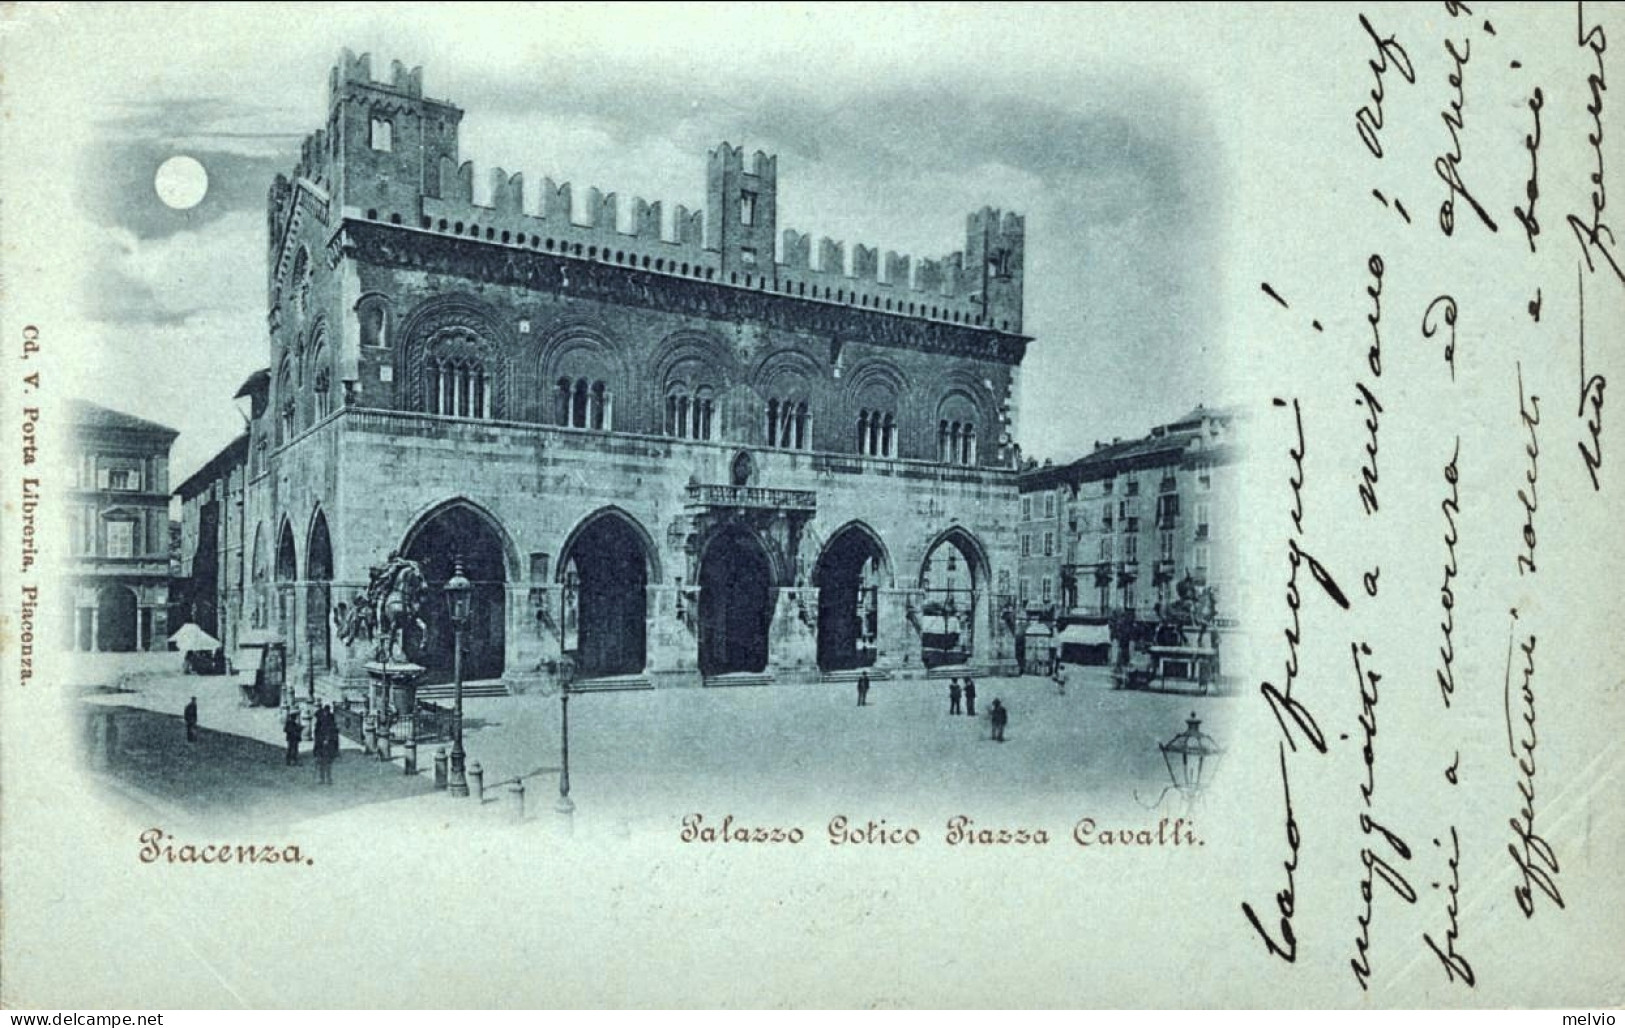 1898-Piacenza Palazzo Gotico Piazza Cavalli,affrancata 10c.Umberto (perfetto!) C - Piacenza